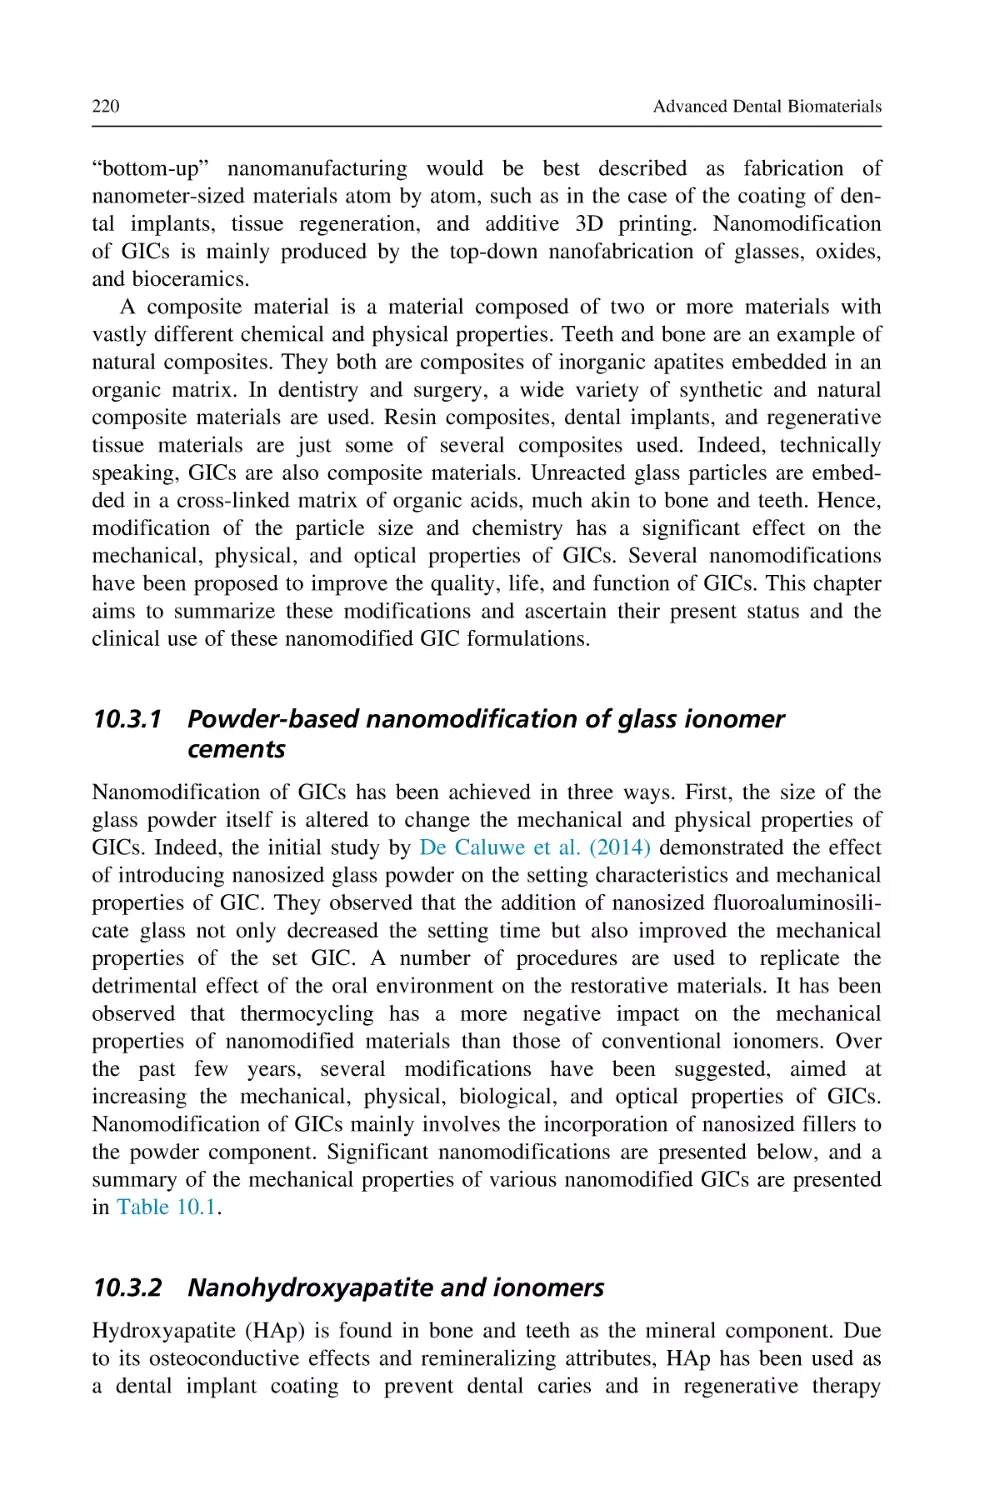 10.3.1 Powder-based nanomodification of glass ionomer cements
10.3.2 Nanohydroxyapatite and ionomers